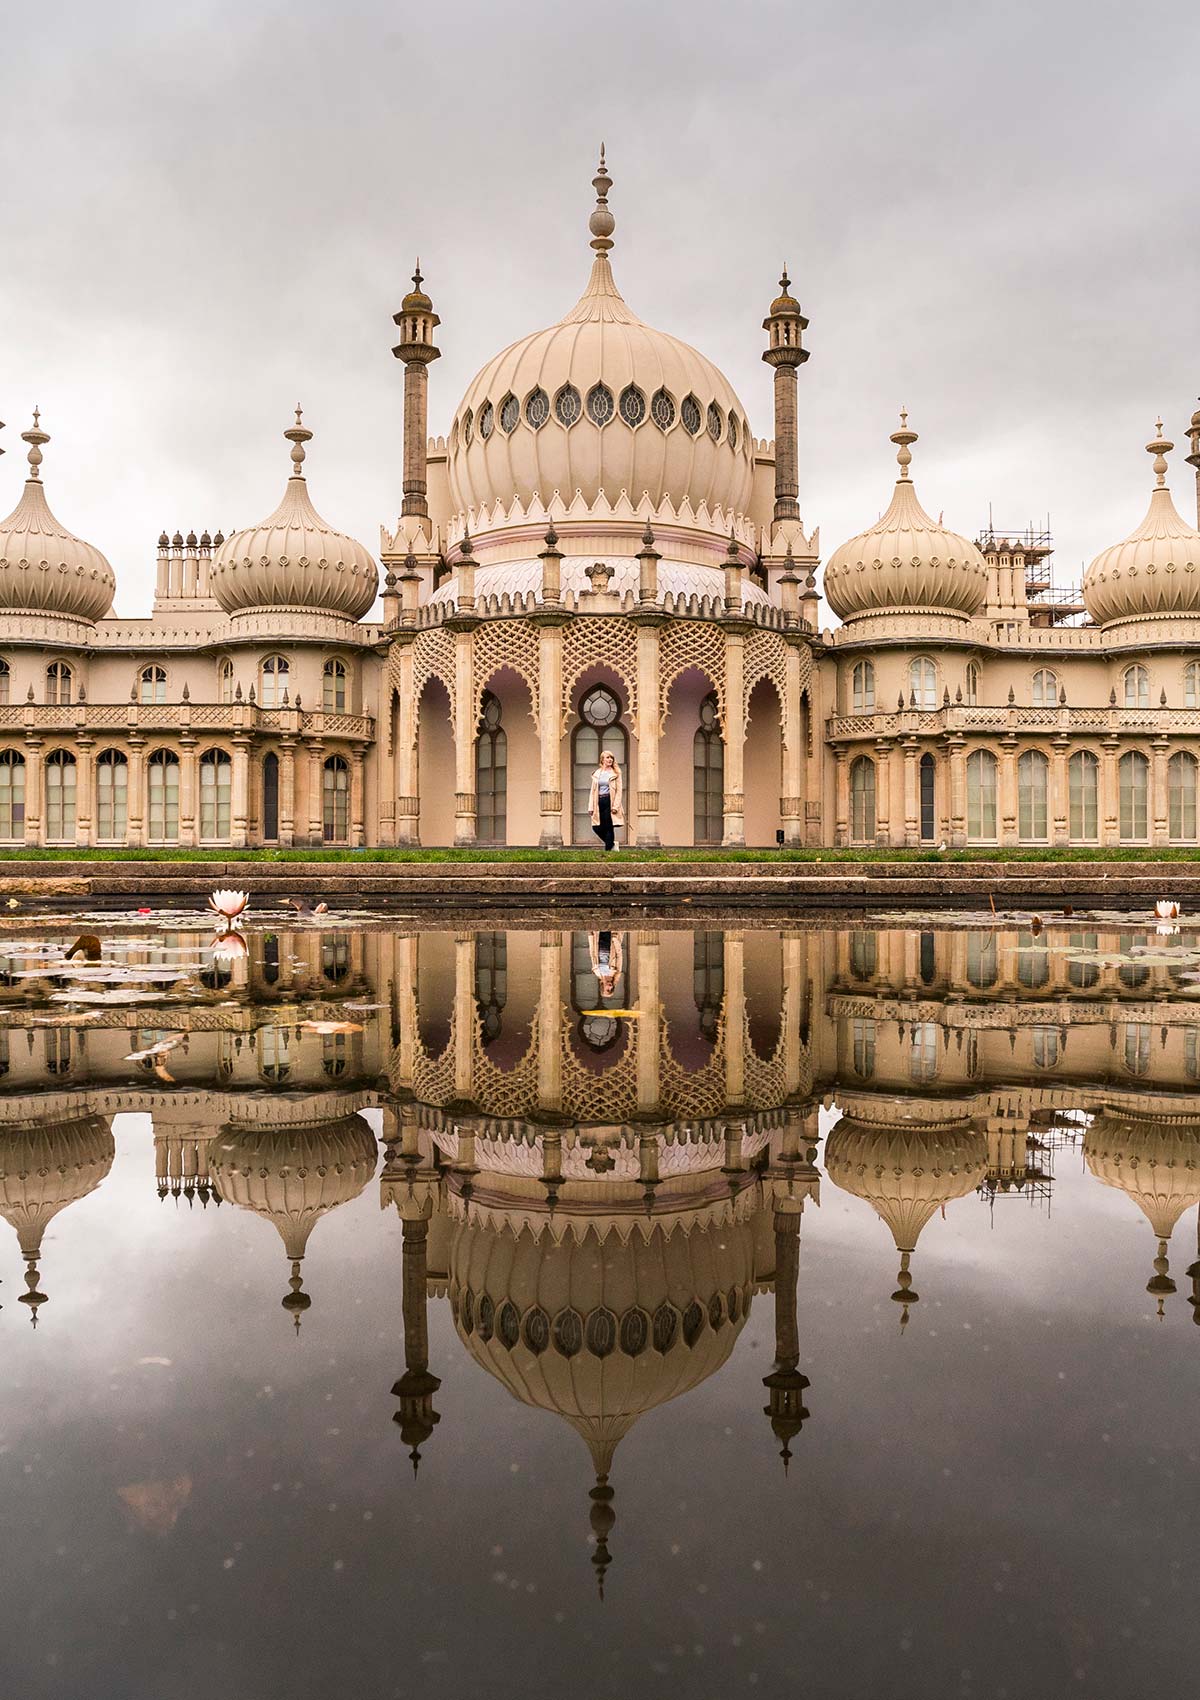 Pavillon Royal, Palais de Brighton, Angleterre, Royaume-Uni / Brighton Royal Pavilion, England, UK